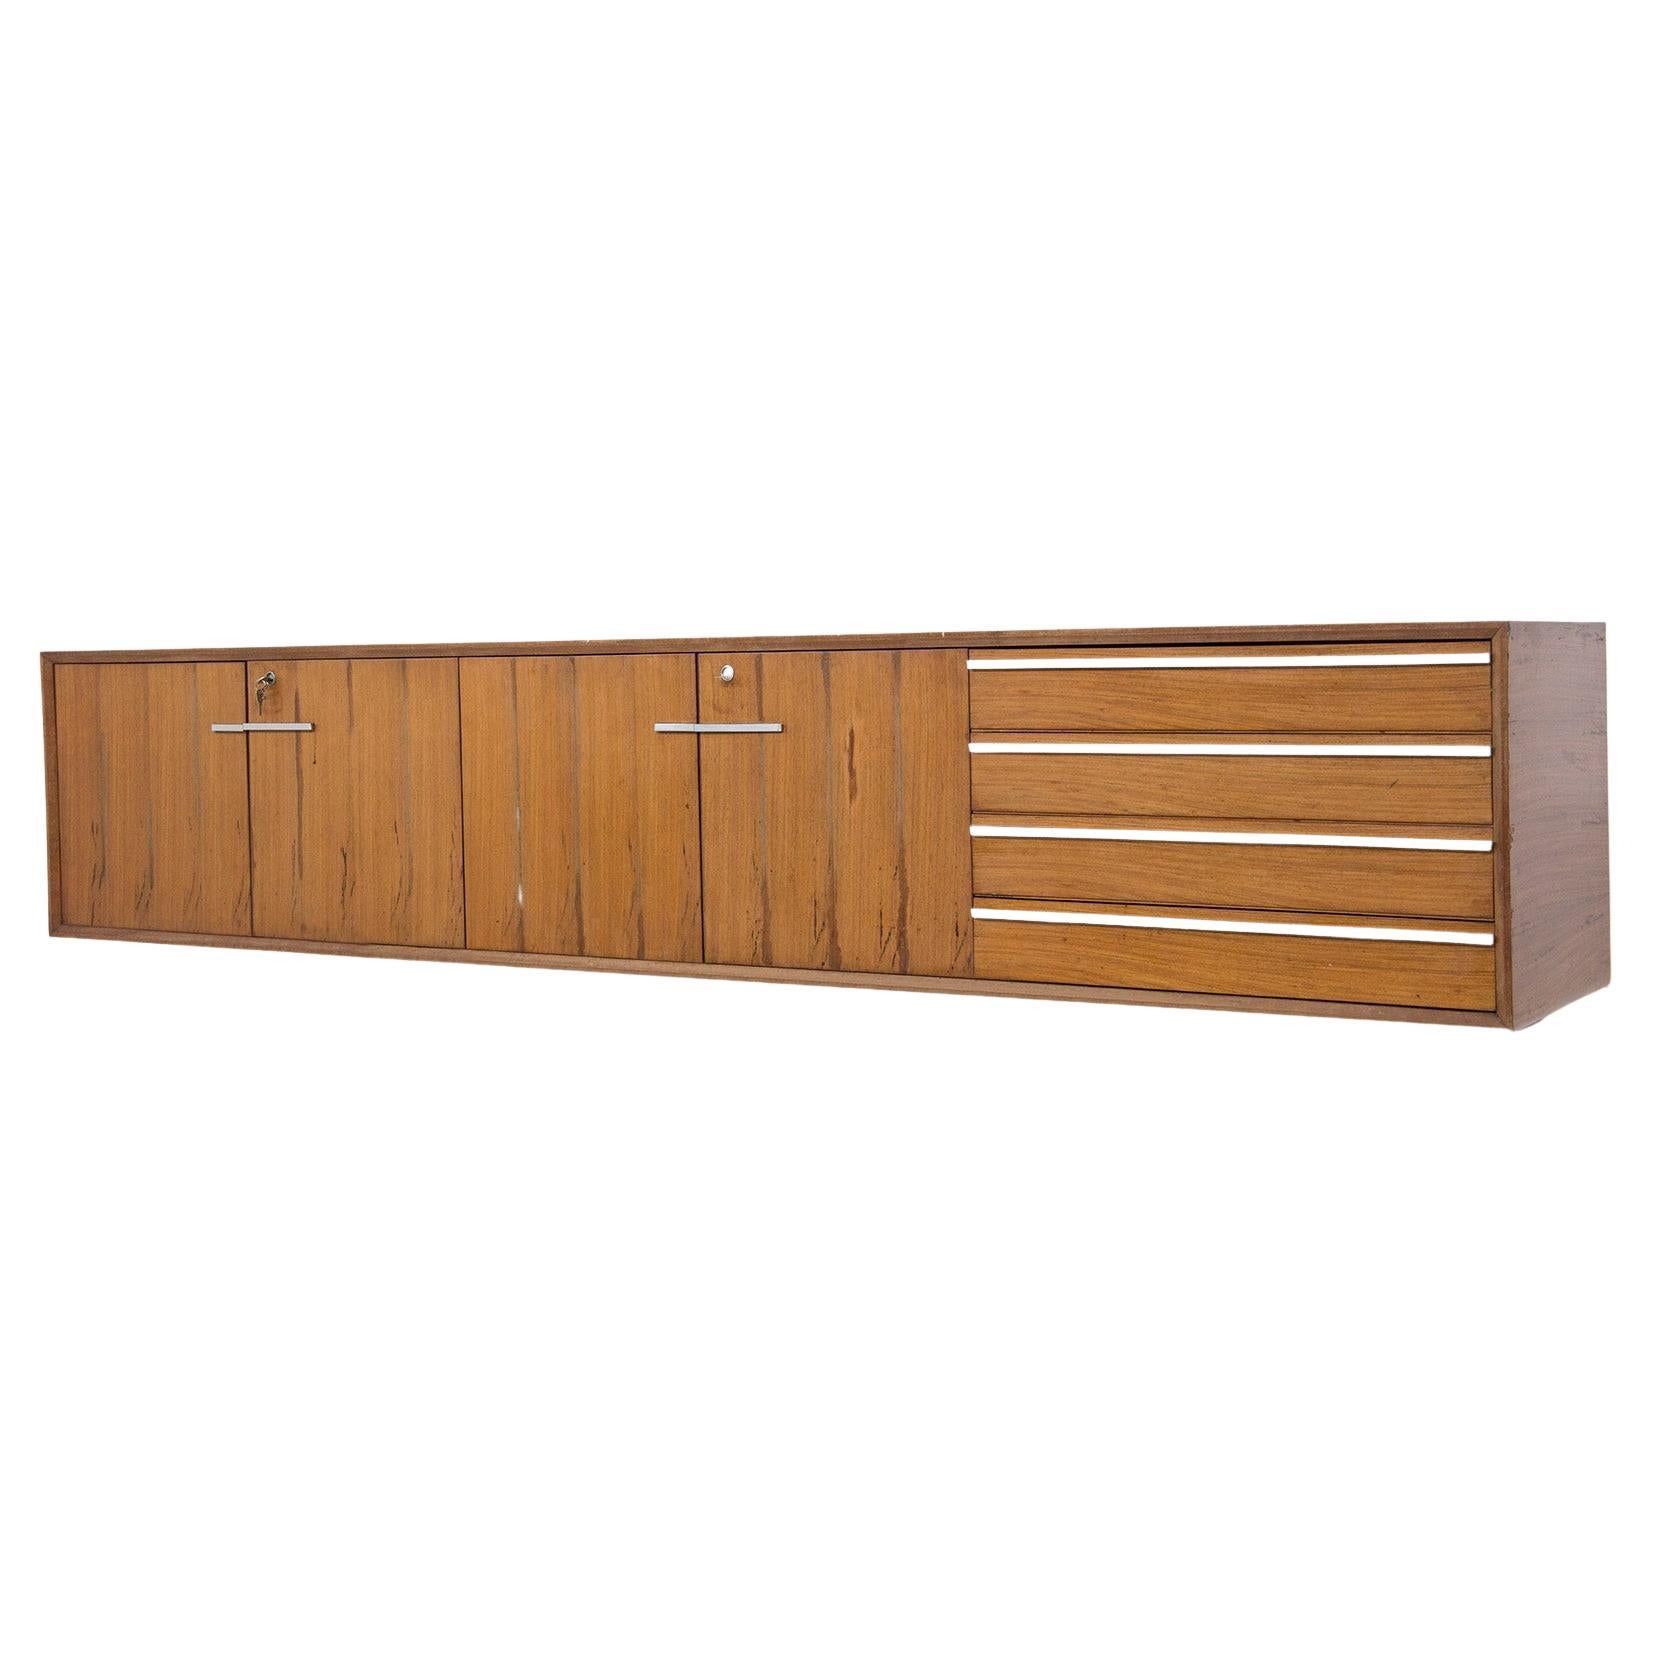 Italian Mid-Century Wooden Sideboard For Sale